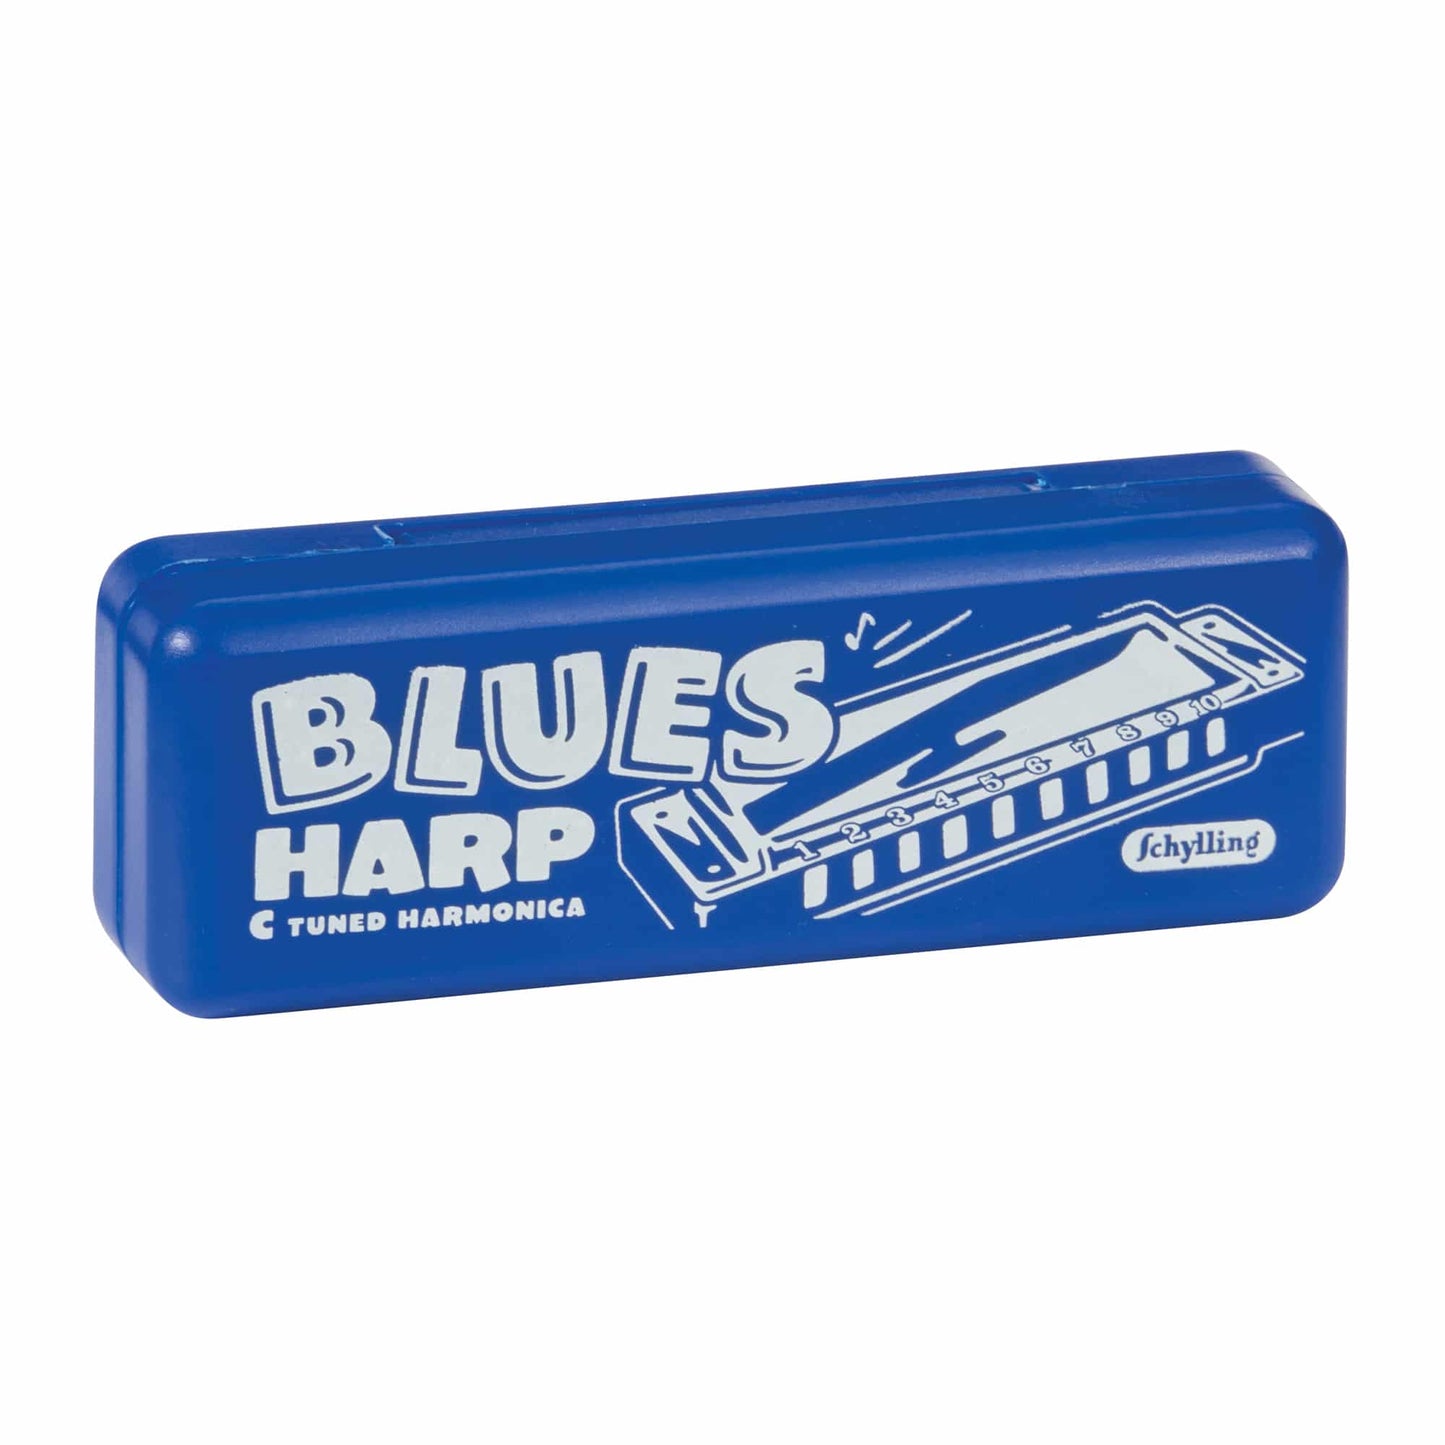 BLUES HARMONICA IN PLASTIC CASE